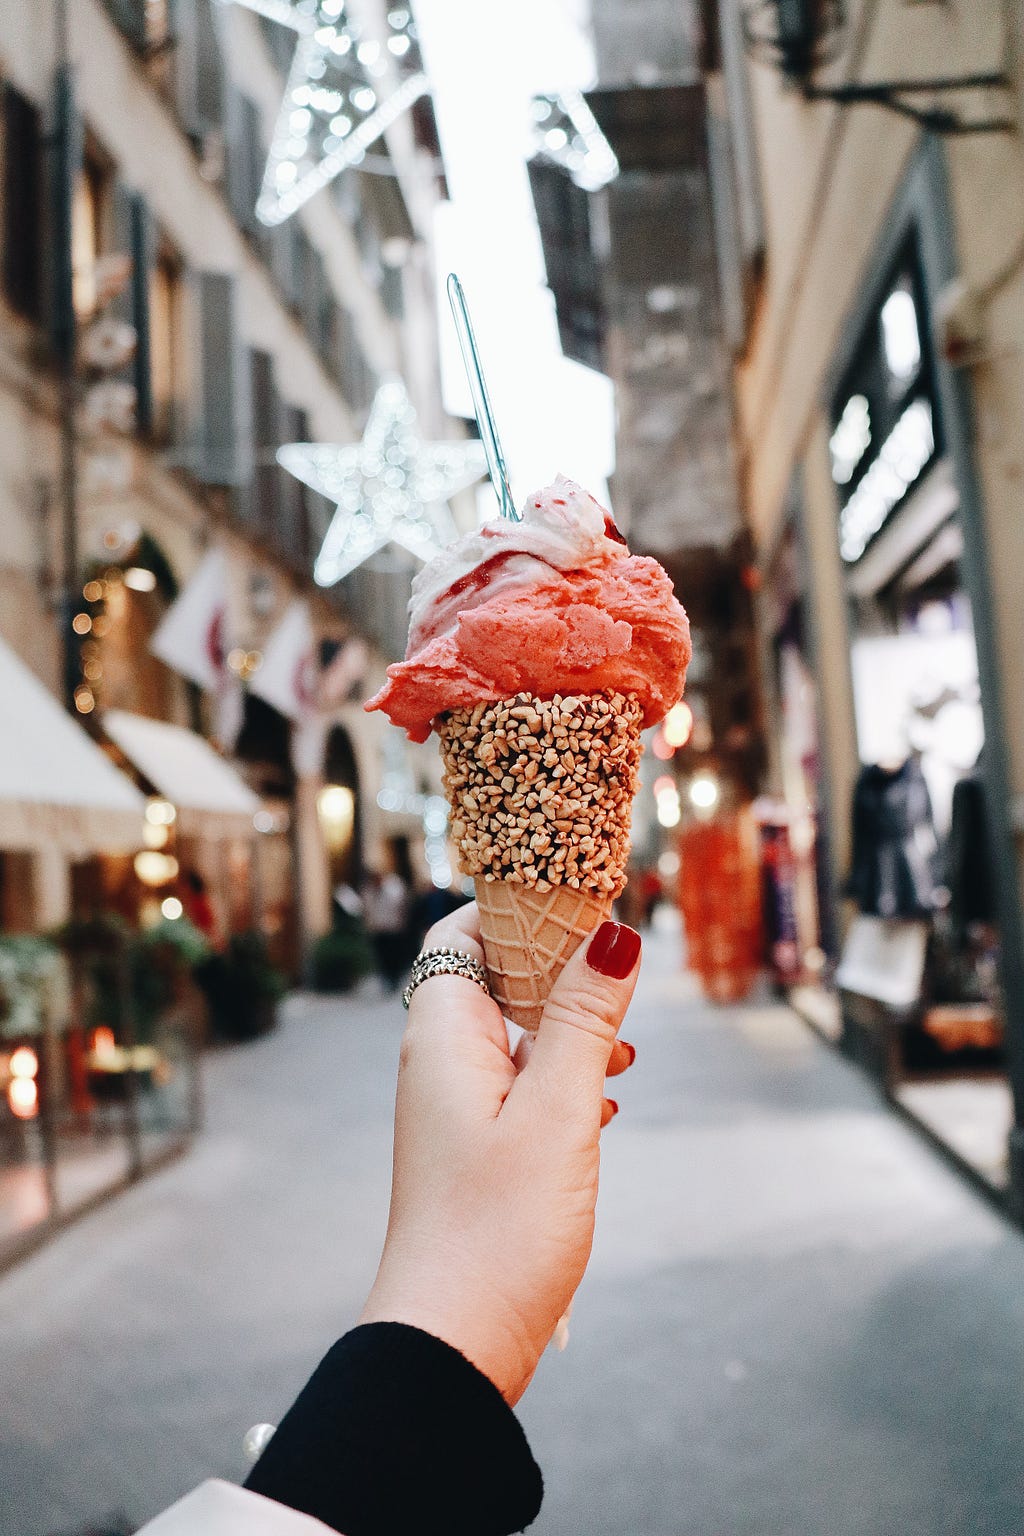 ice cream cone, gelato from Florence Italy